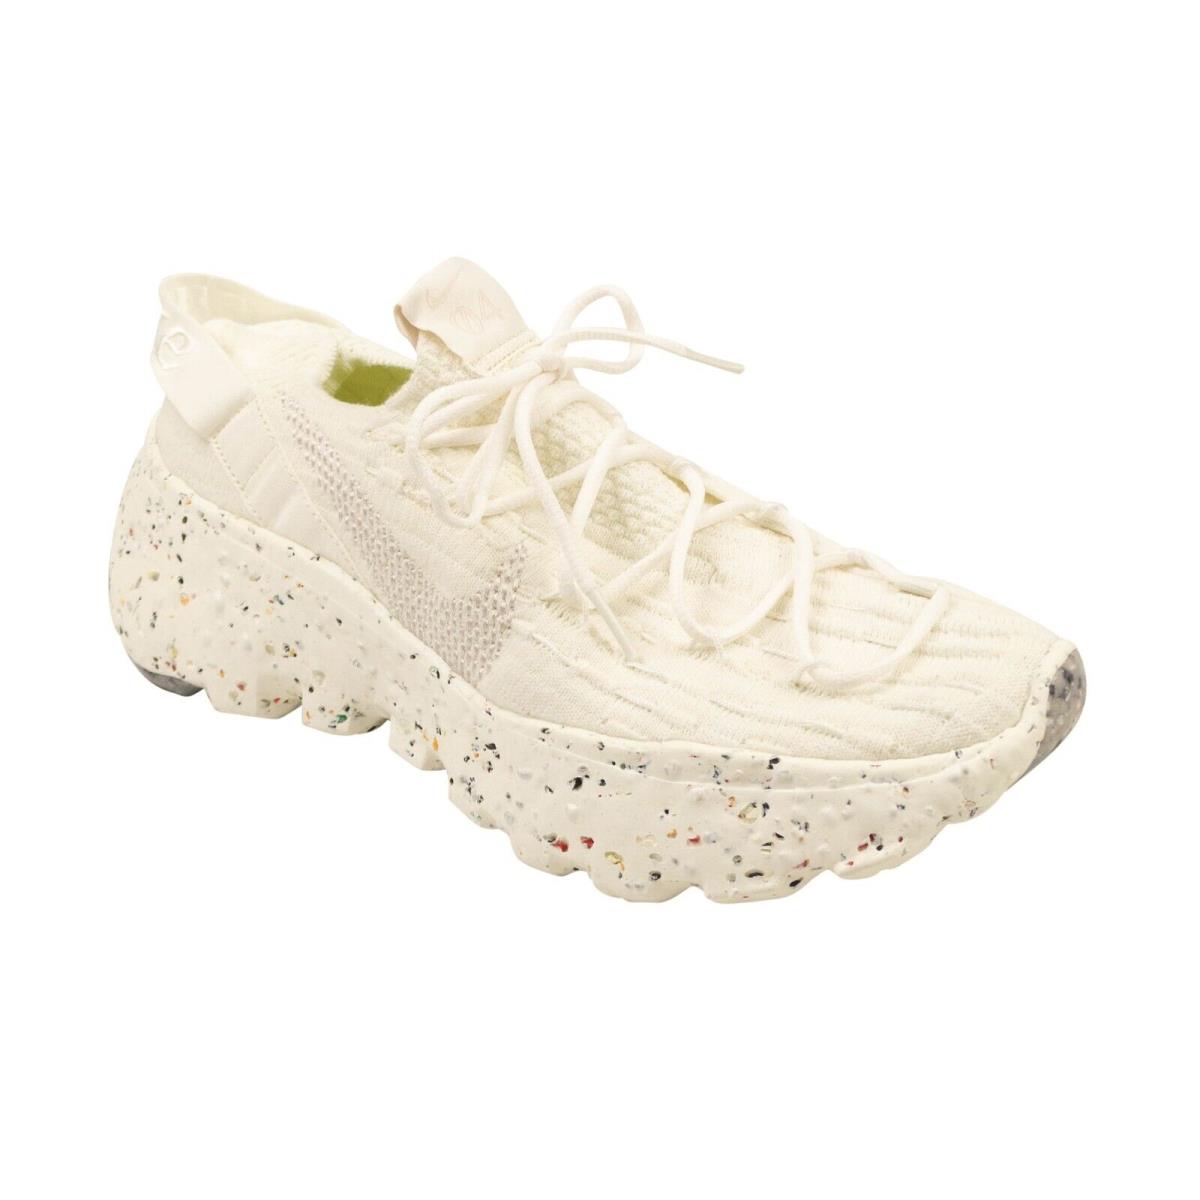 Nike White Wmns Space Hippie 04 Sneakers Size 10.5/42.5